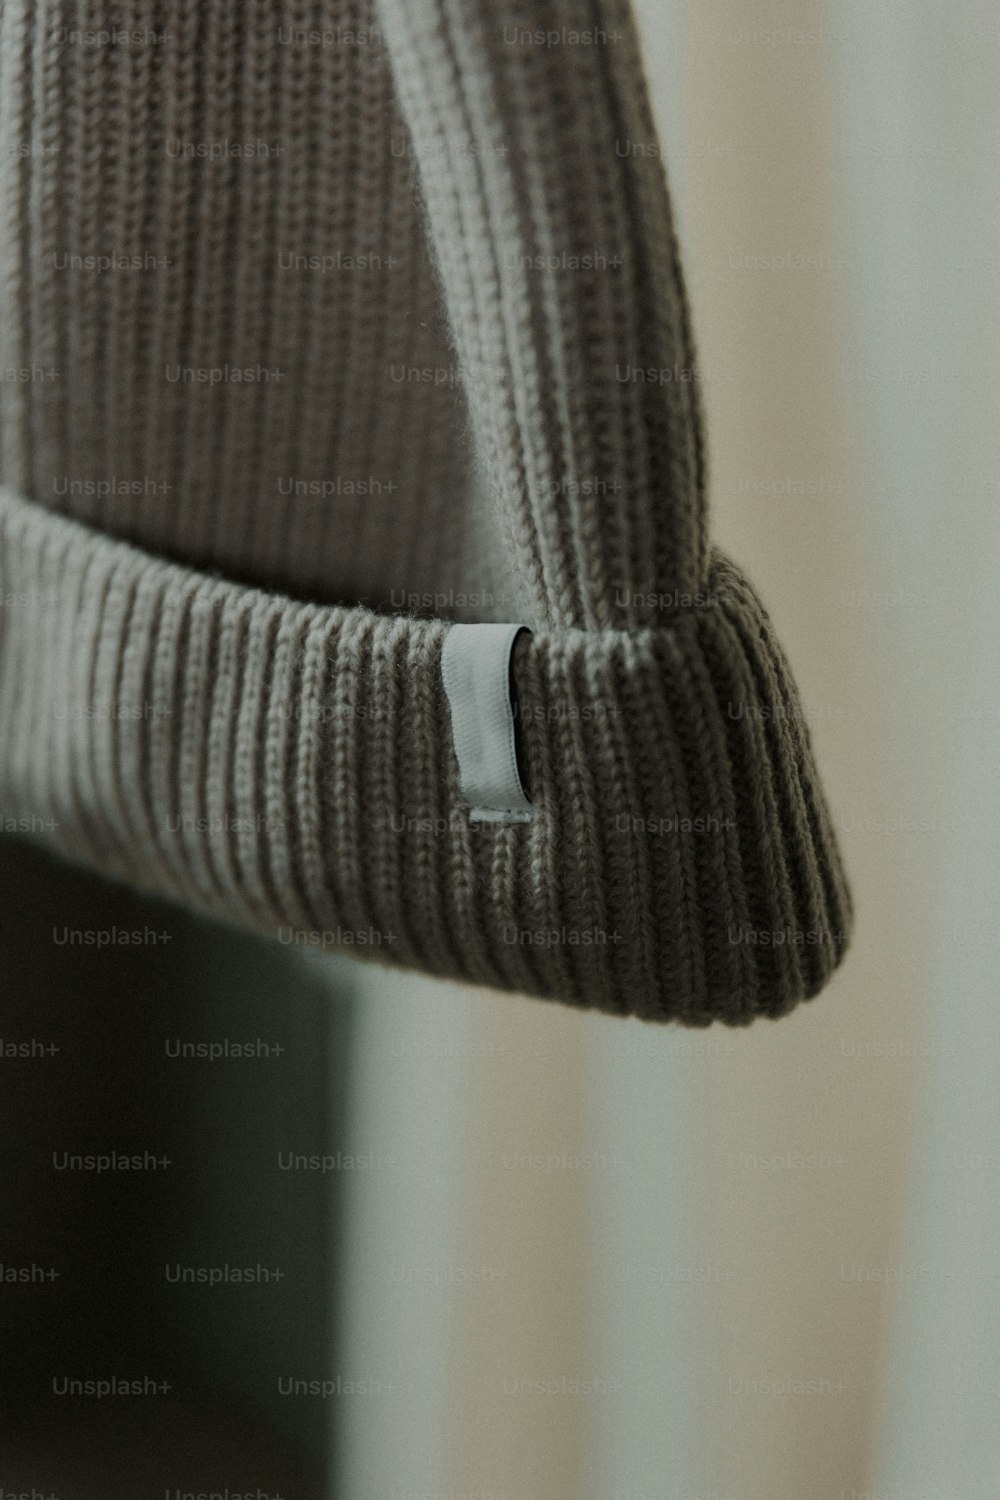 Un primer plano de un botón en un suéter